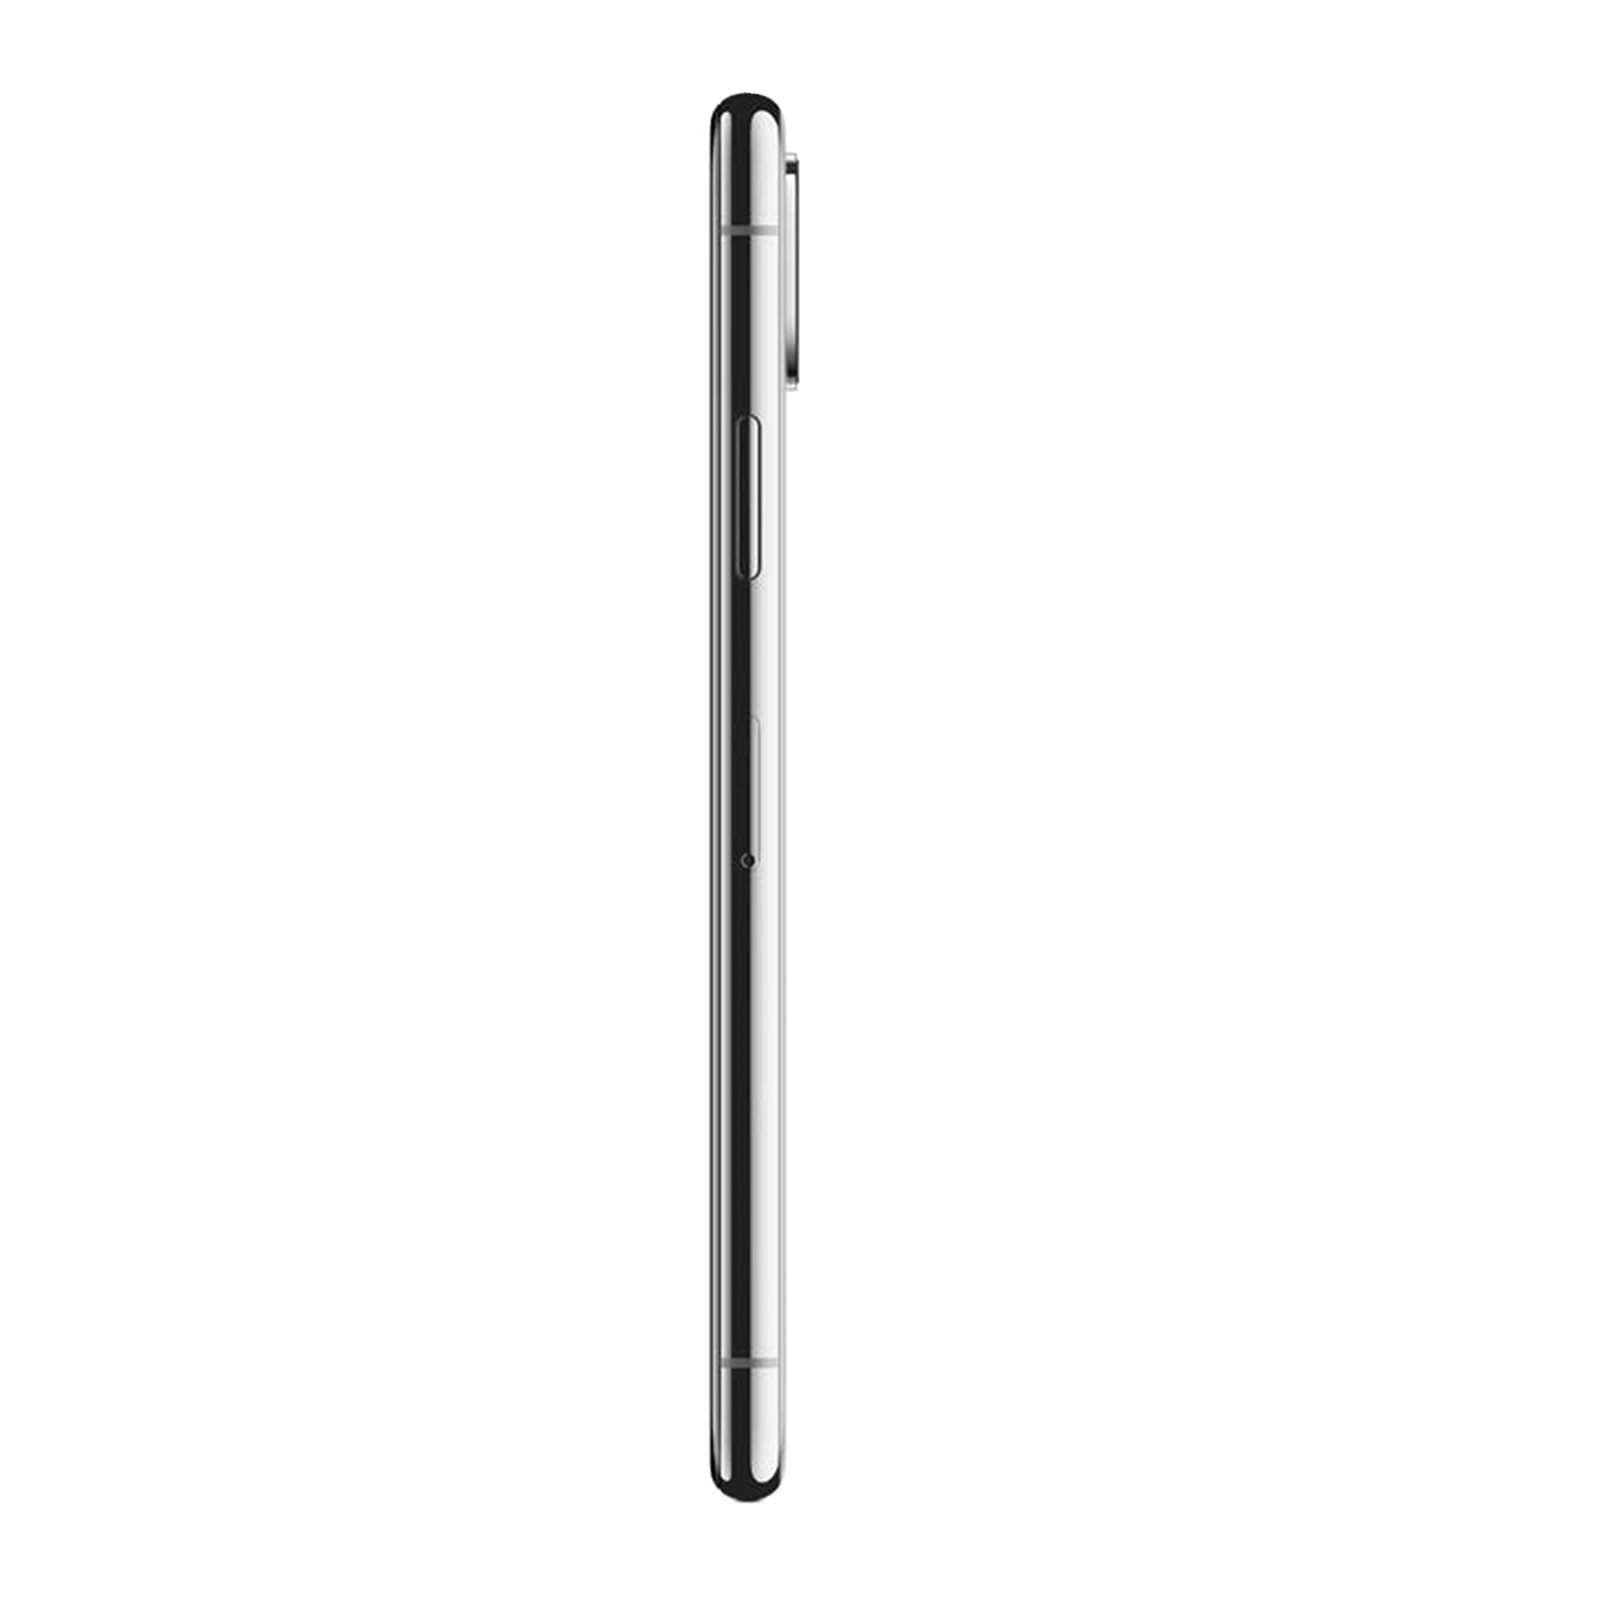 Apple iPhone XS Max 512GB Silver Pristine - Unlocked